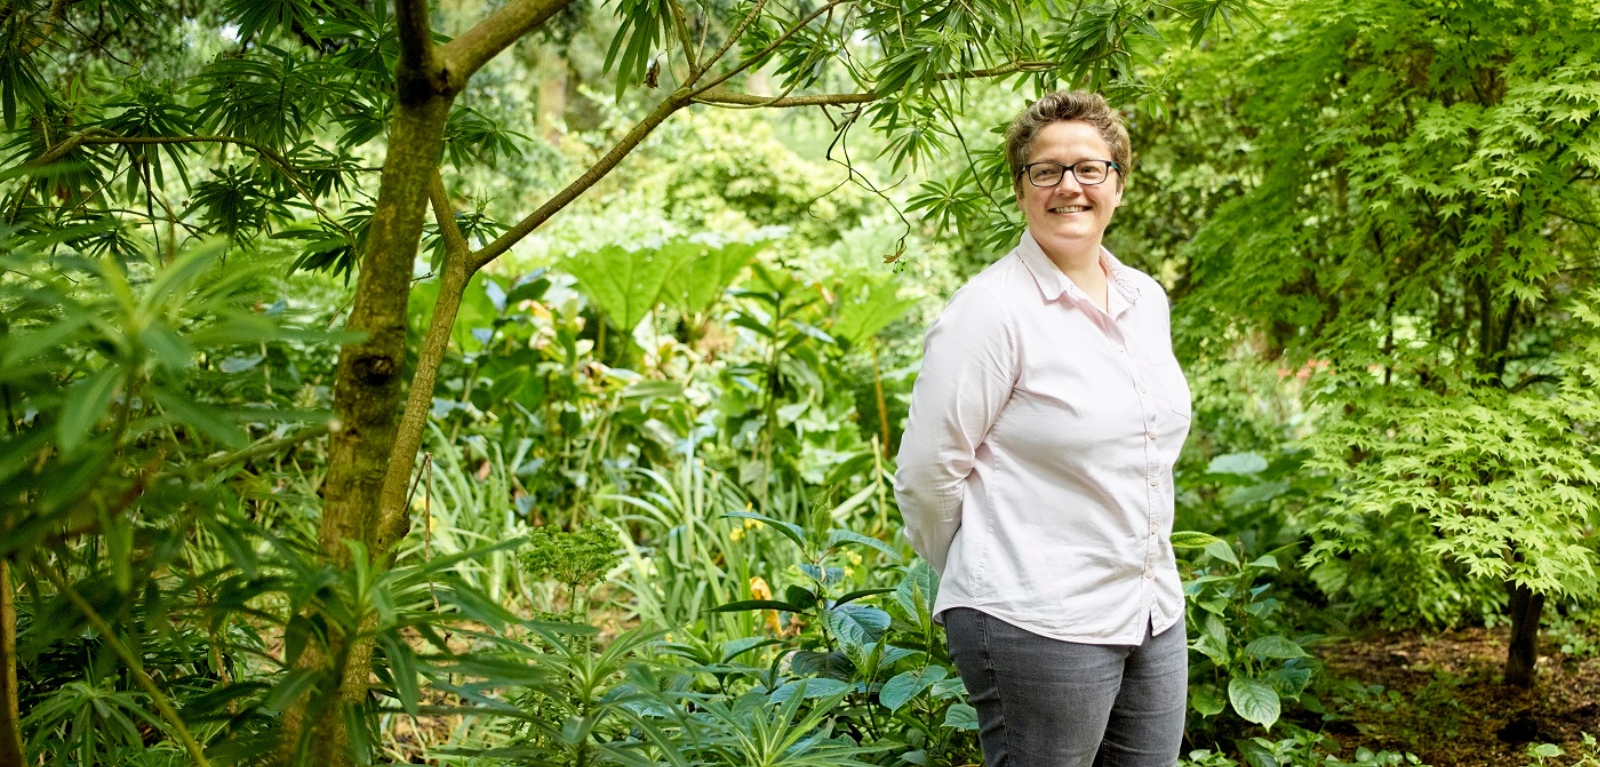 Professor Ruth Hunter surrounded by vegetation